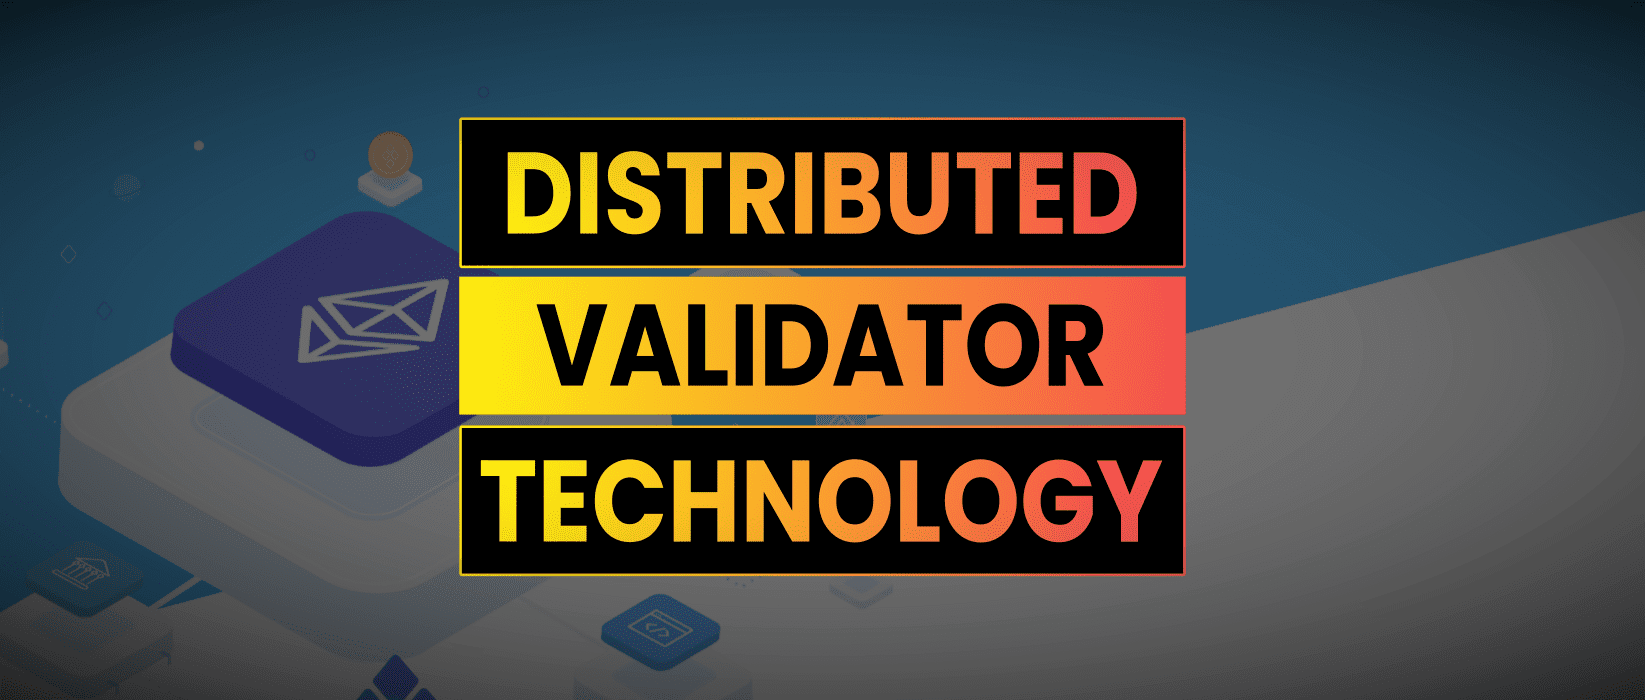 DVT Distributed Validator Technology